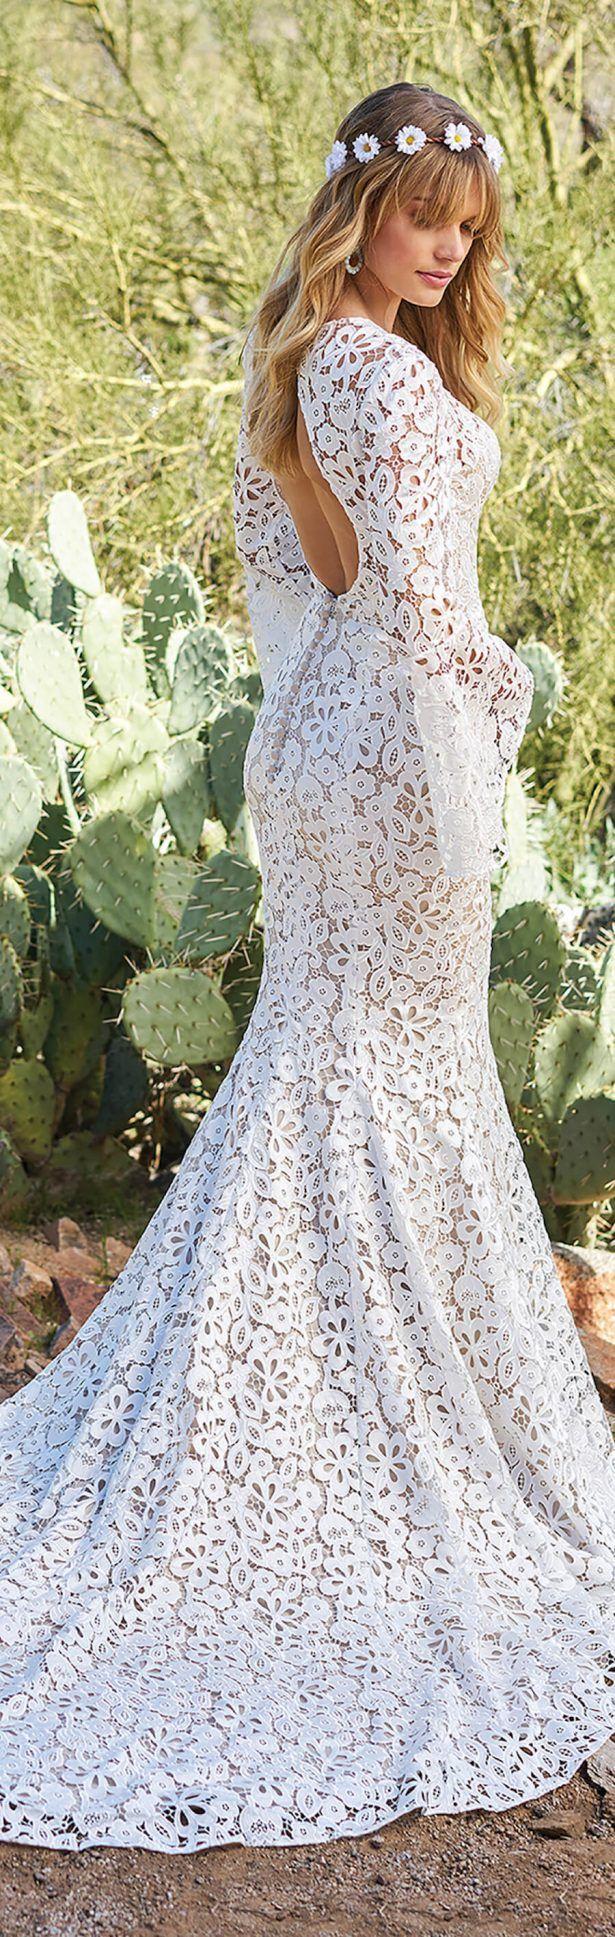 زفاف - Lillian West Wedding Dress Collection Spring 2018